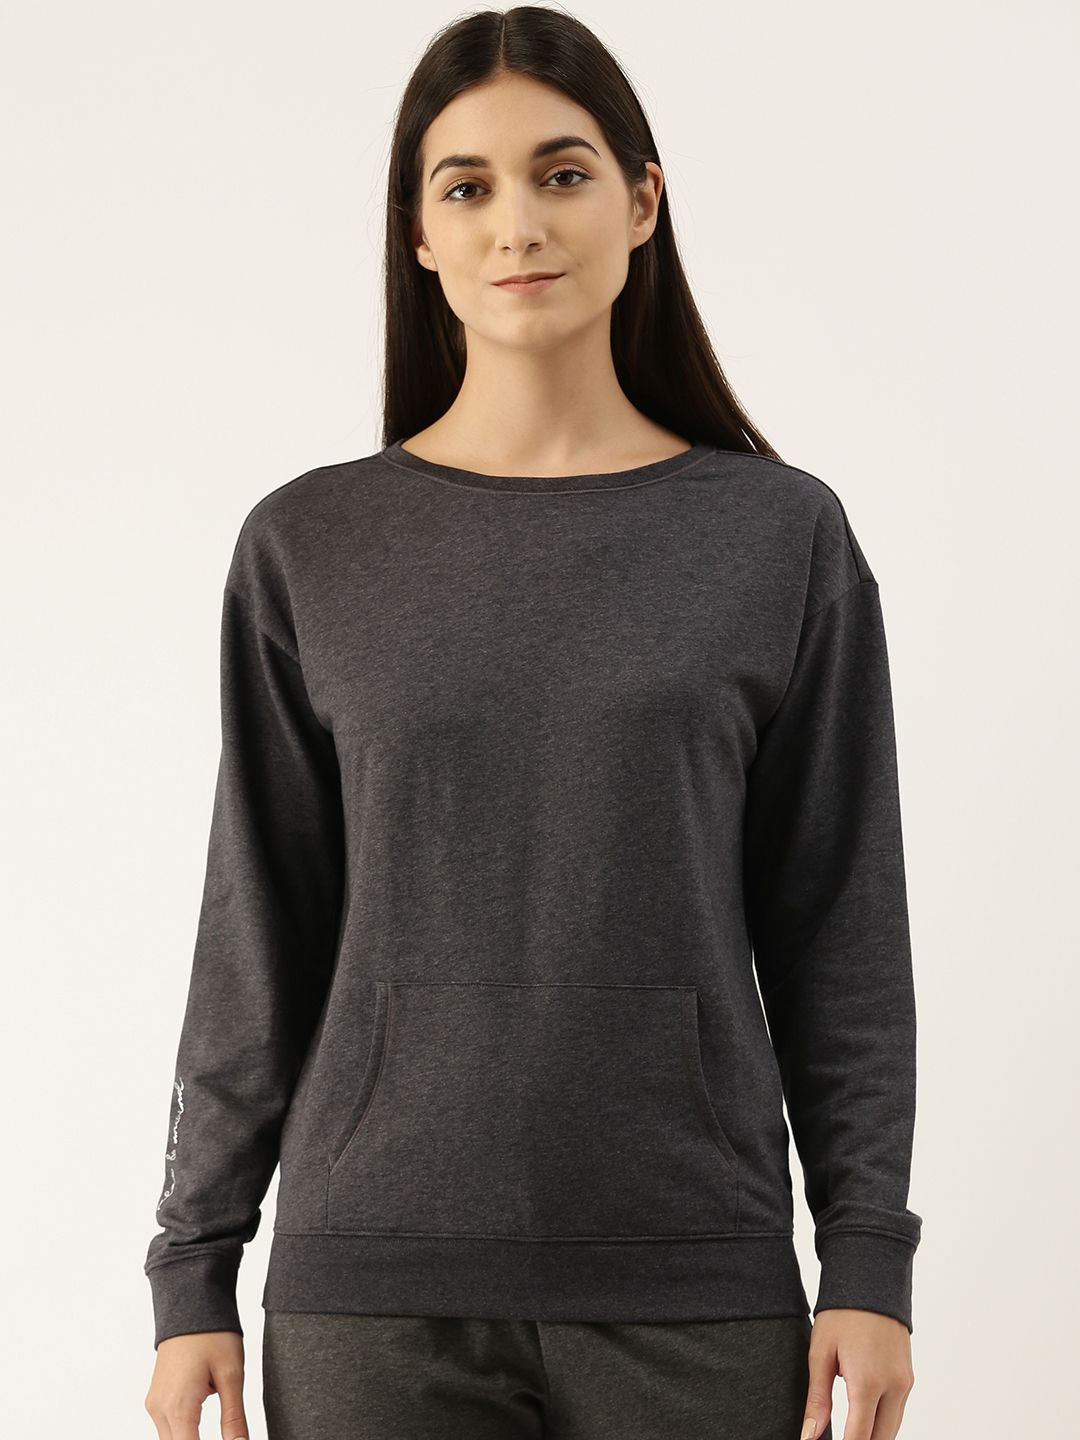 Enamor Women Charcoal Sweatshirt Price in India